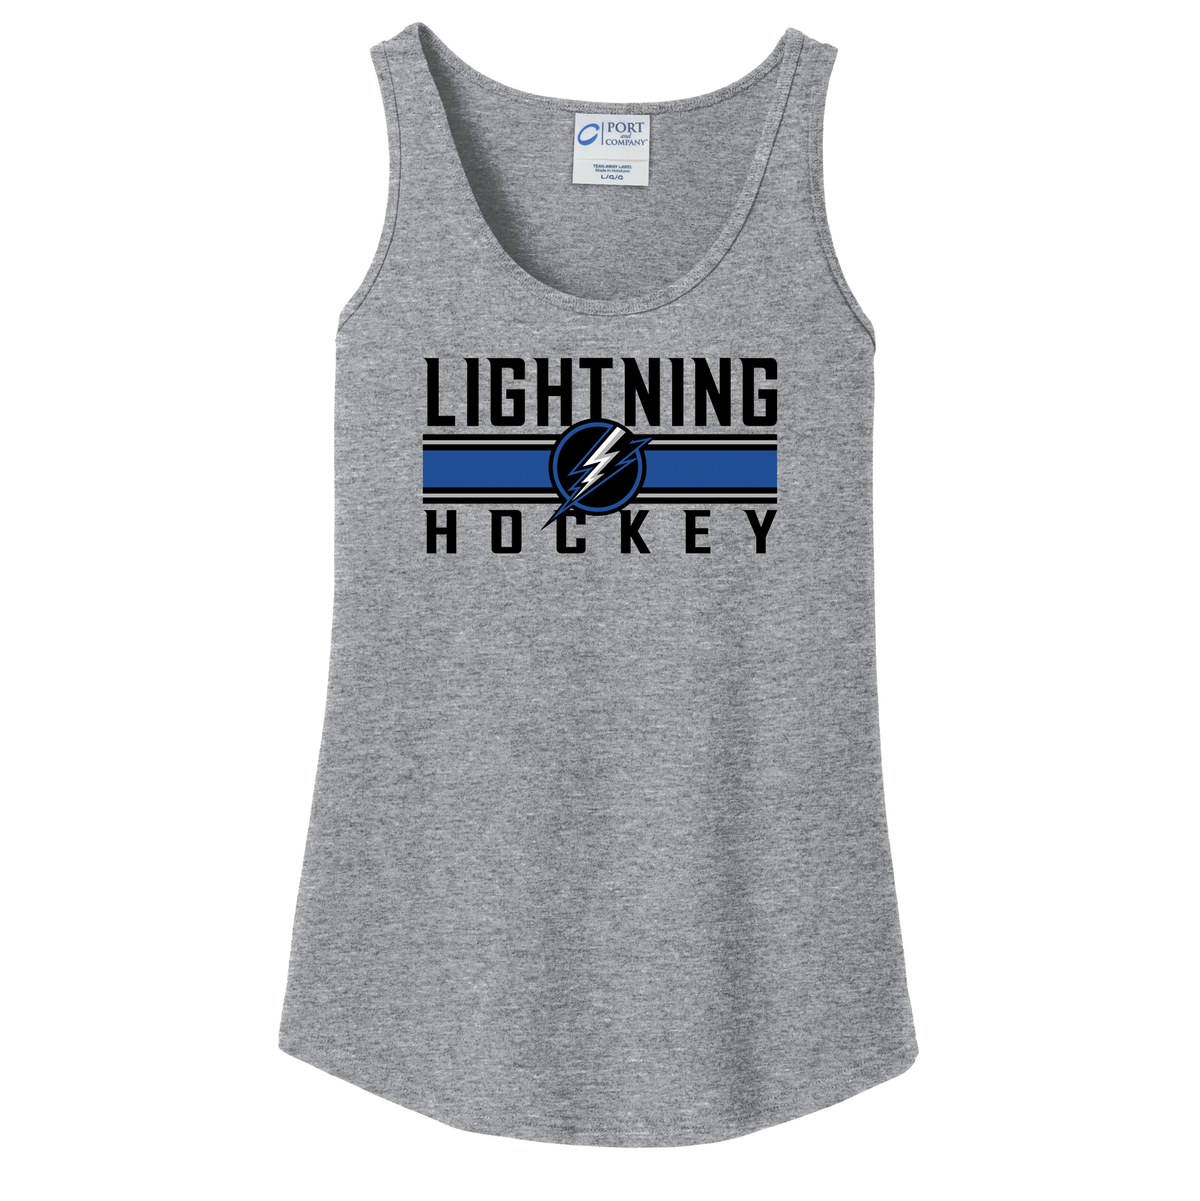 Long Island Lightning Hockey Women's Tank Top